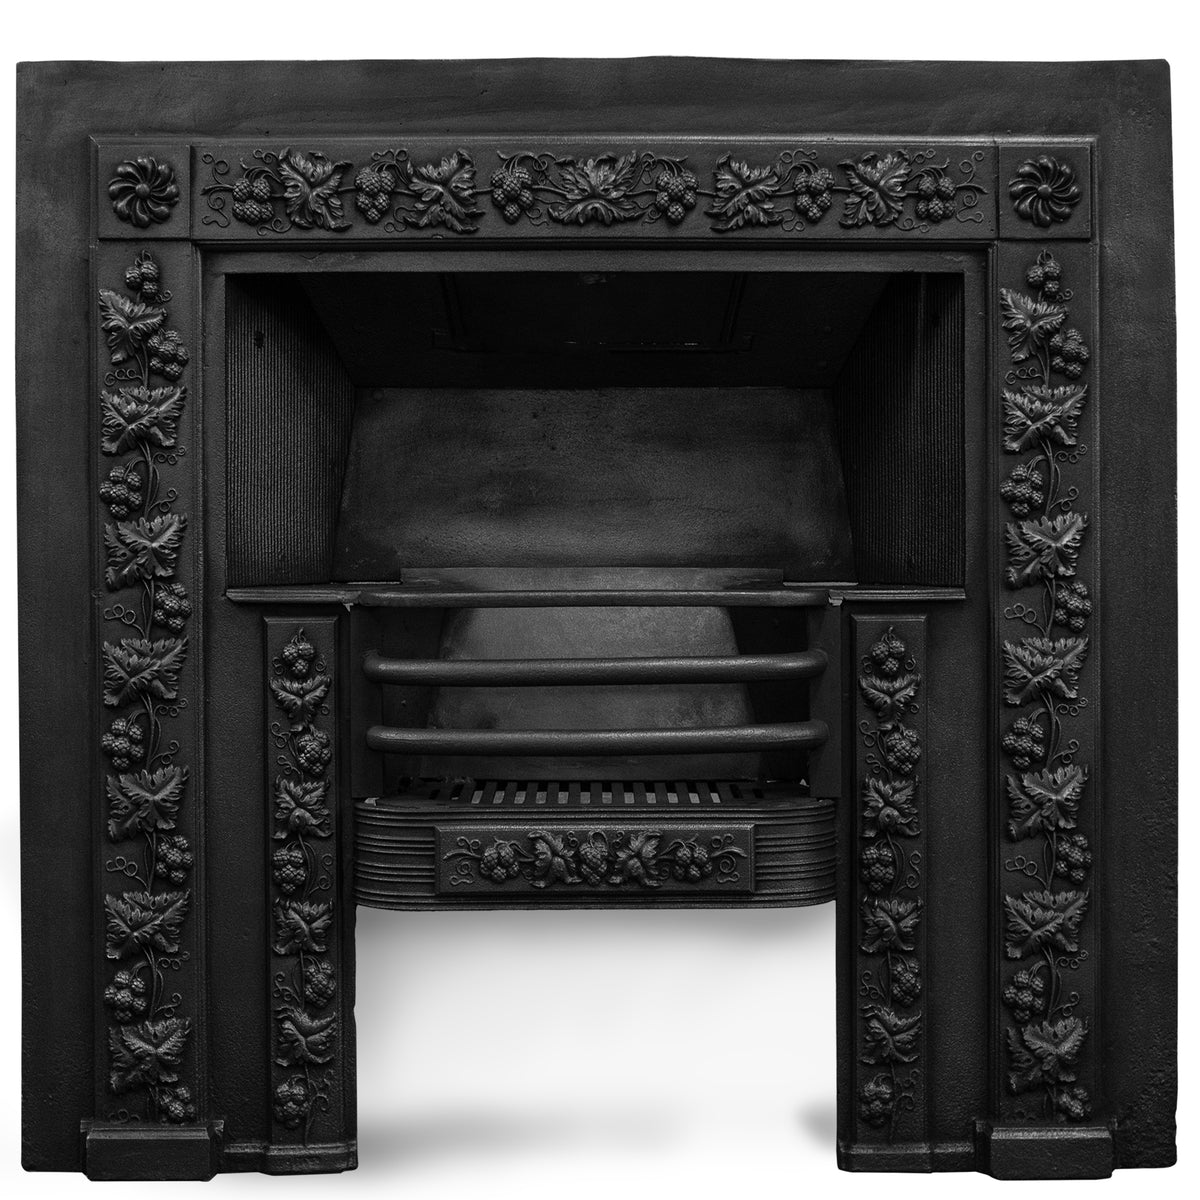 Antique Ornate Georgian Cast Iron Hob Grate Insert | The Architectural Forum